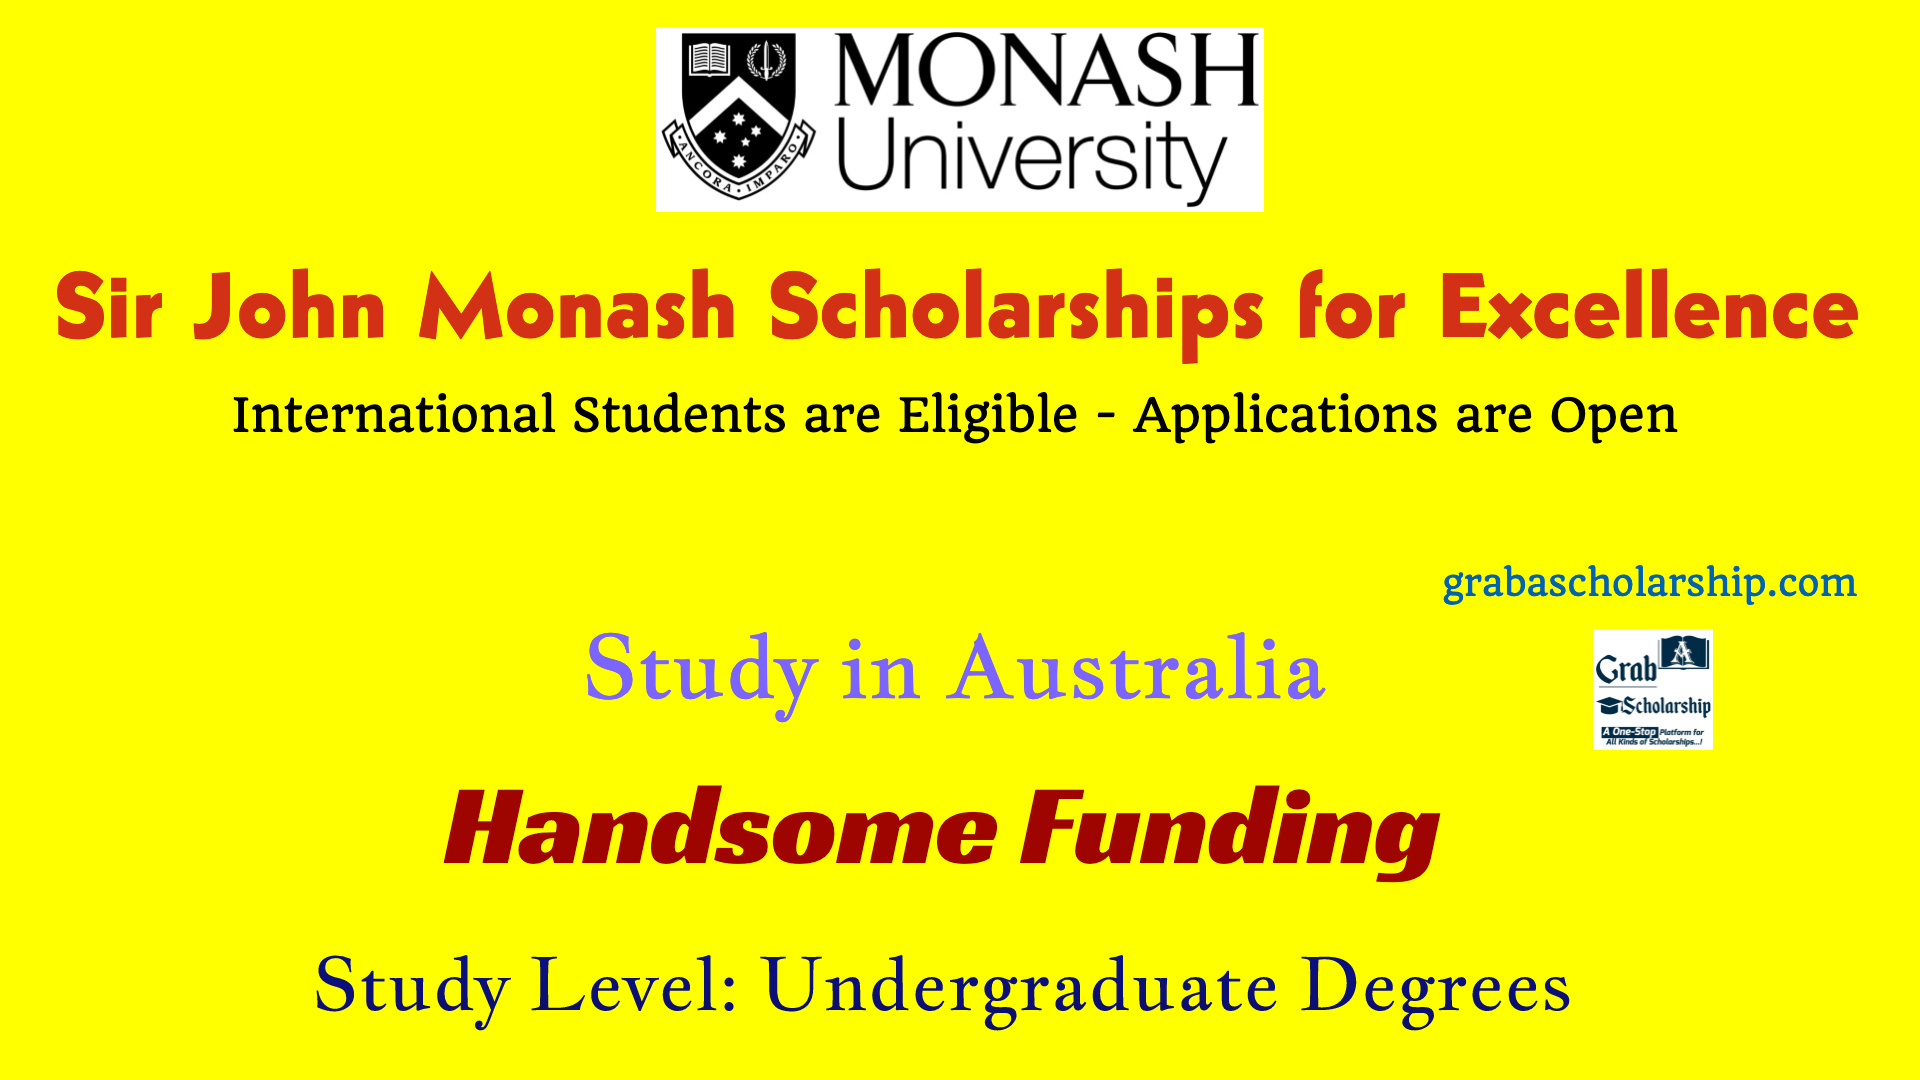 Sir John Monash Scholarships for Excellence for International Students